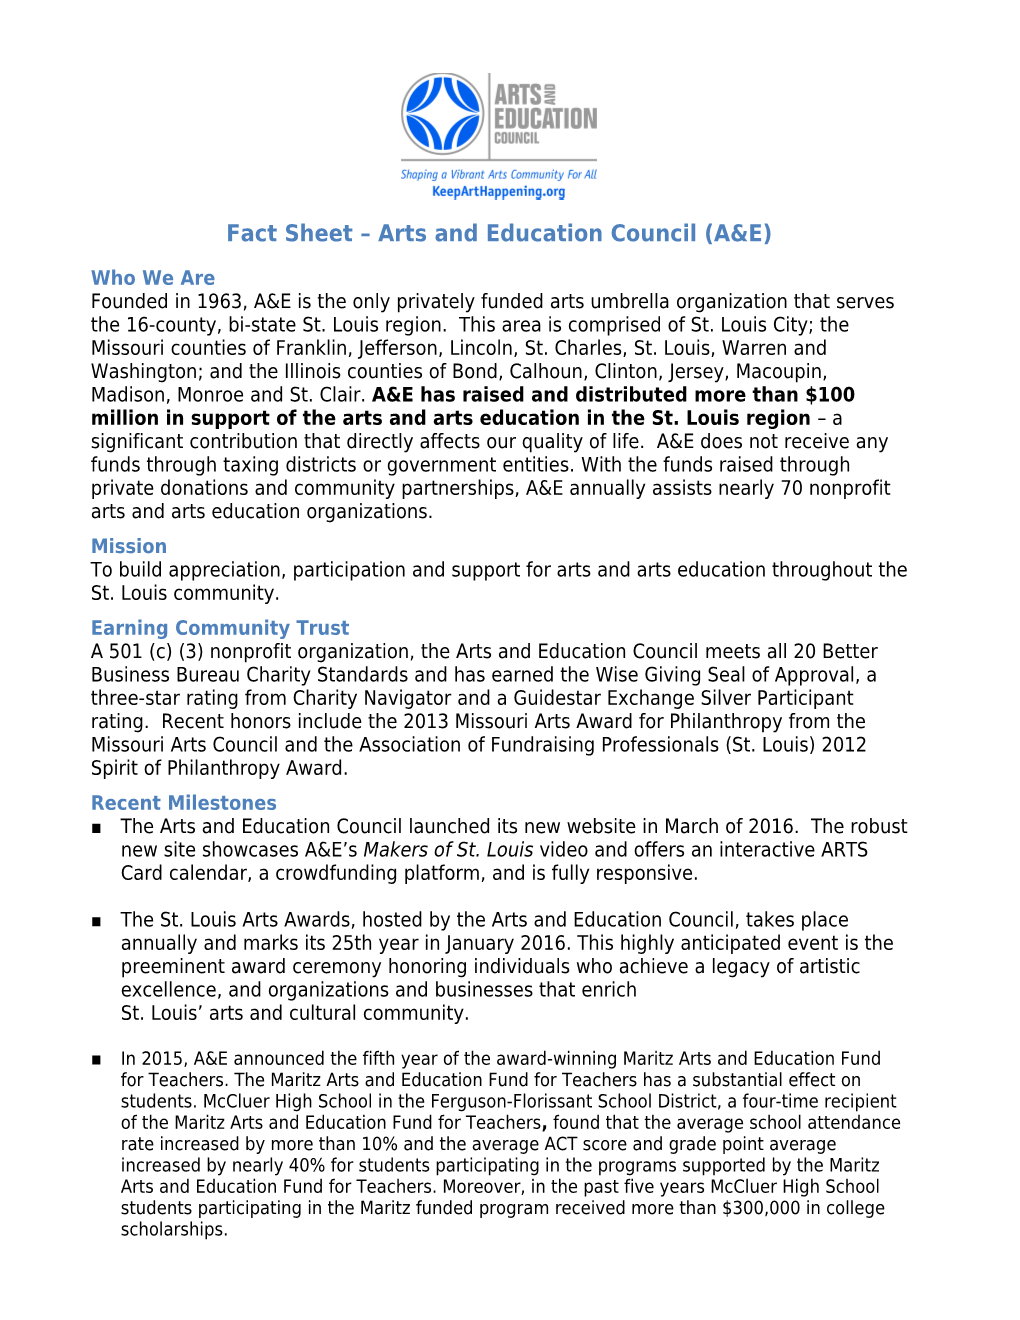 Fact Sheet Arts and Education Council (A&E)